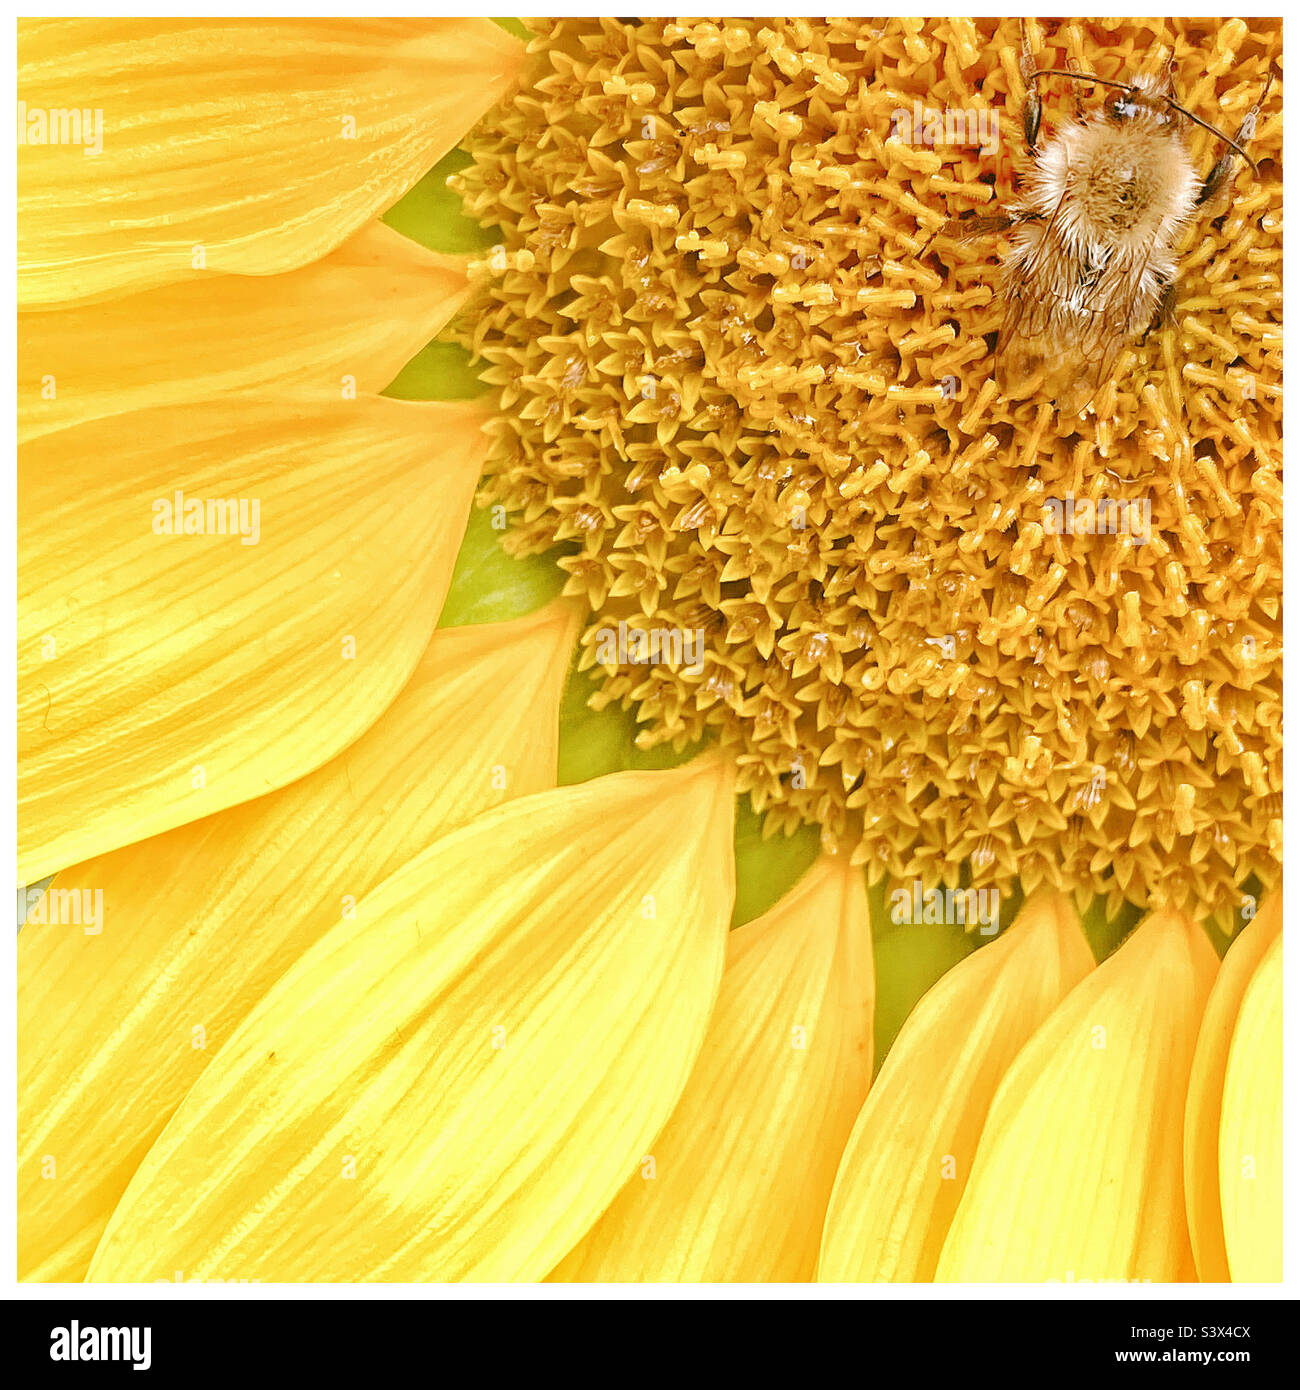 Bumblebee on a sunflower Stock Photo